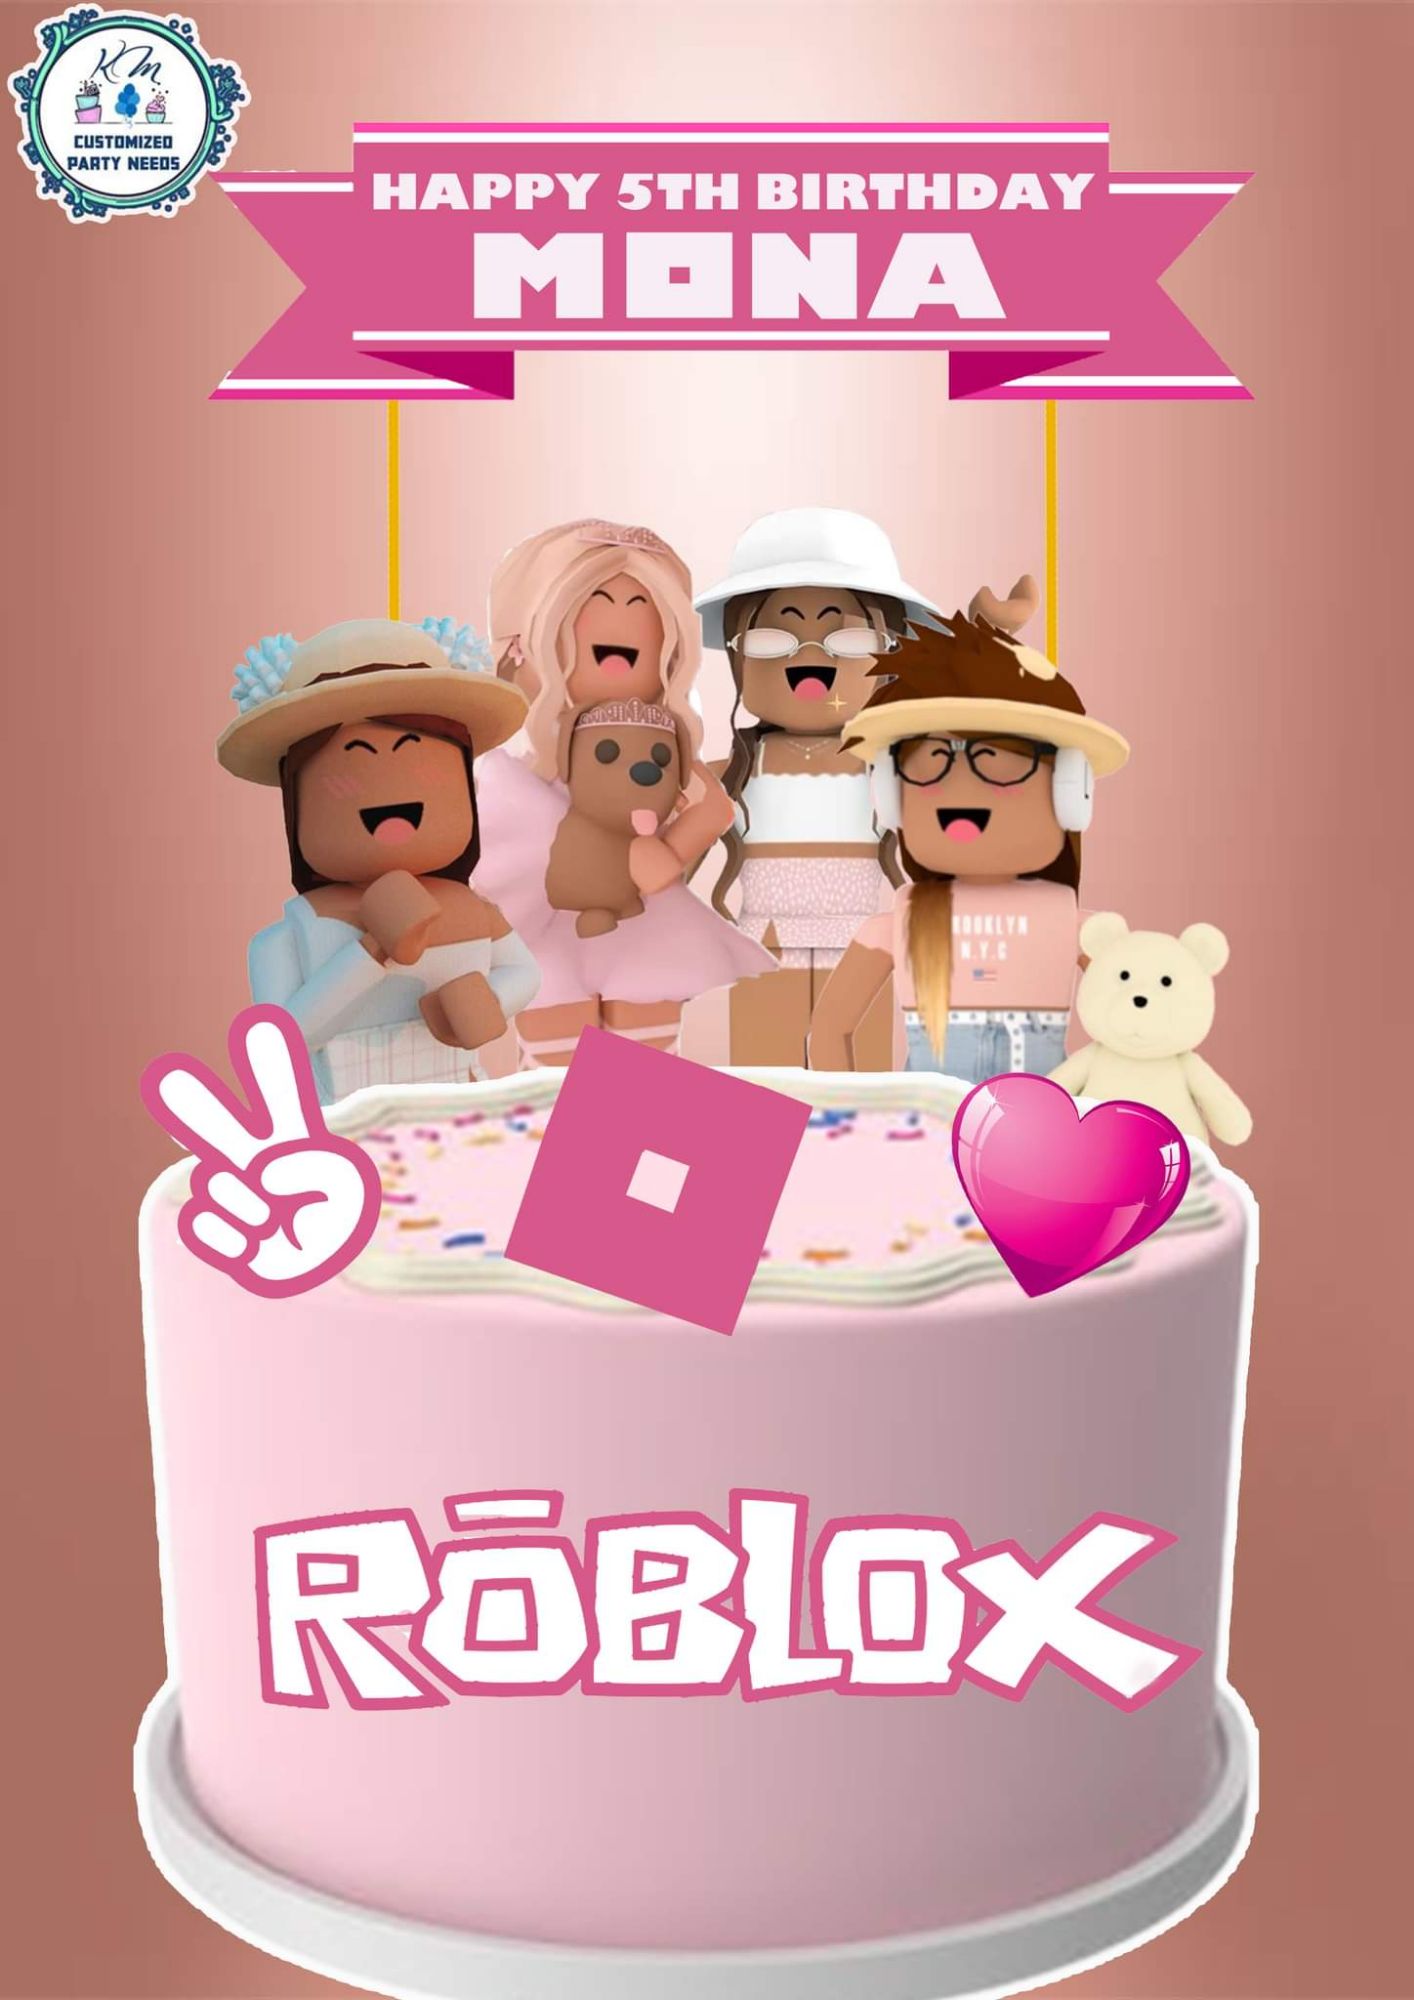 roblox gaming theme cake | gaming theme cake - Levanilla ::